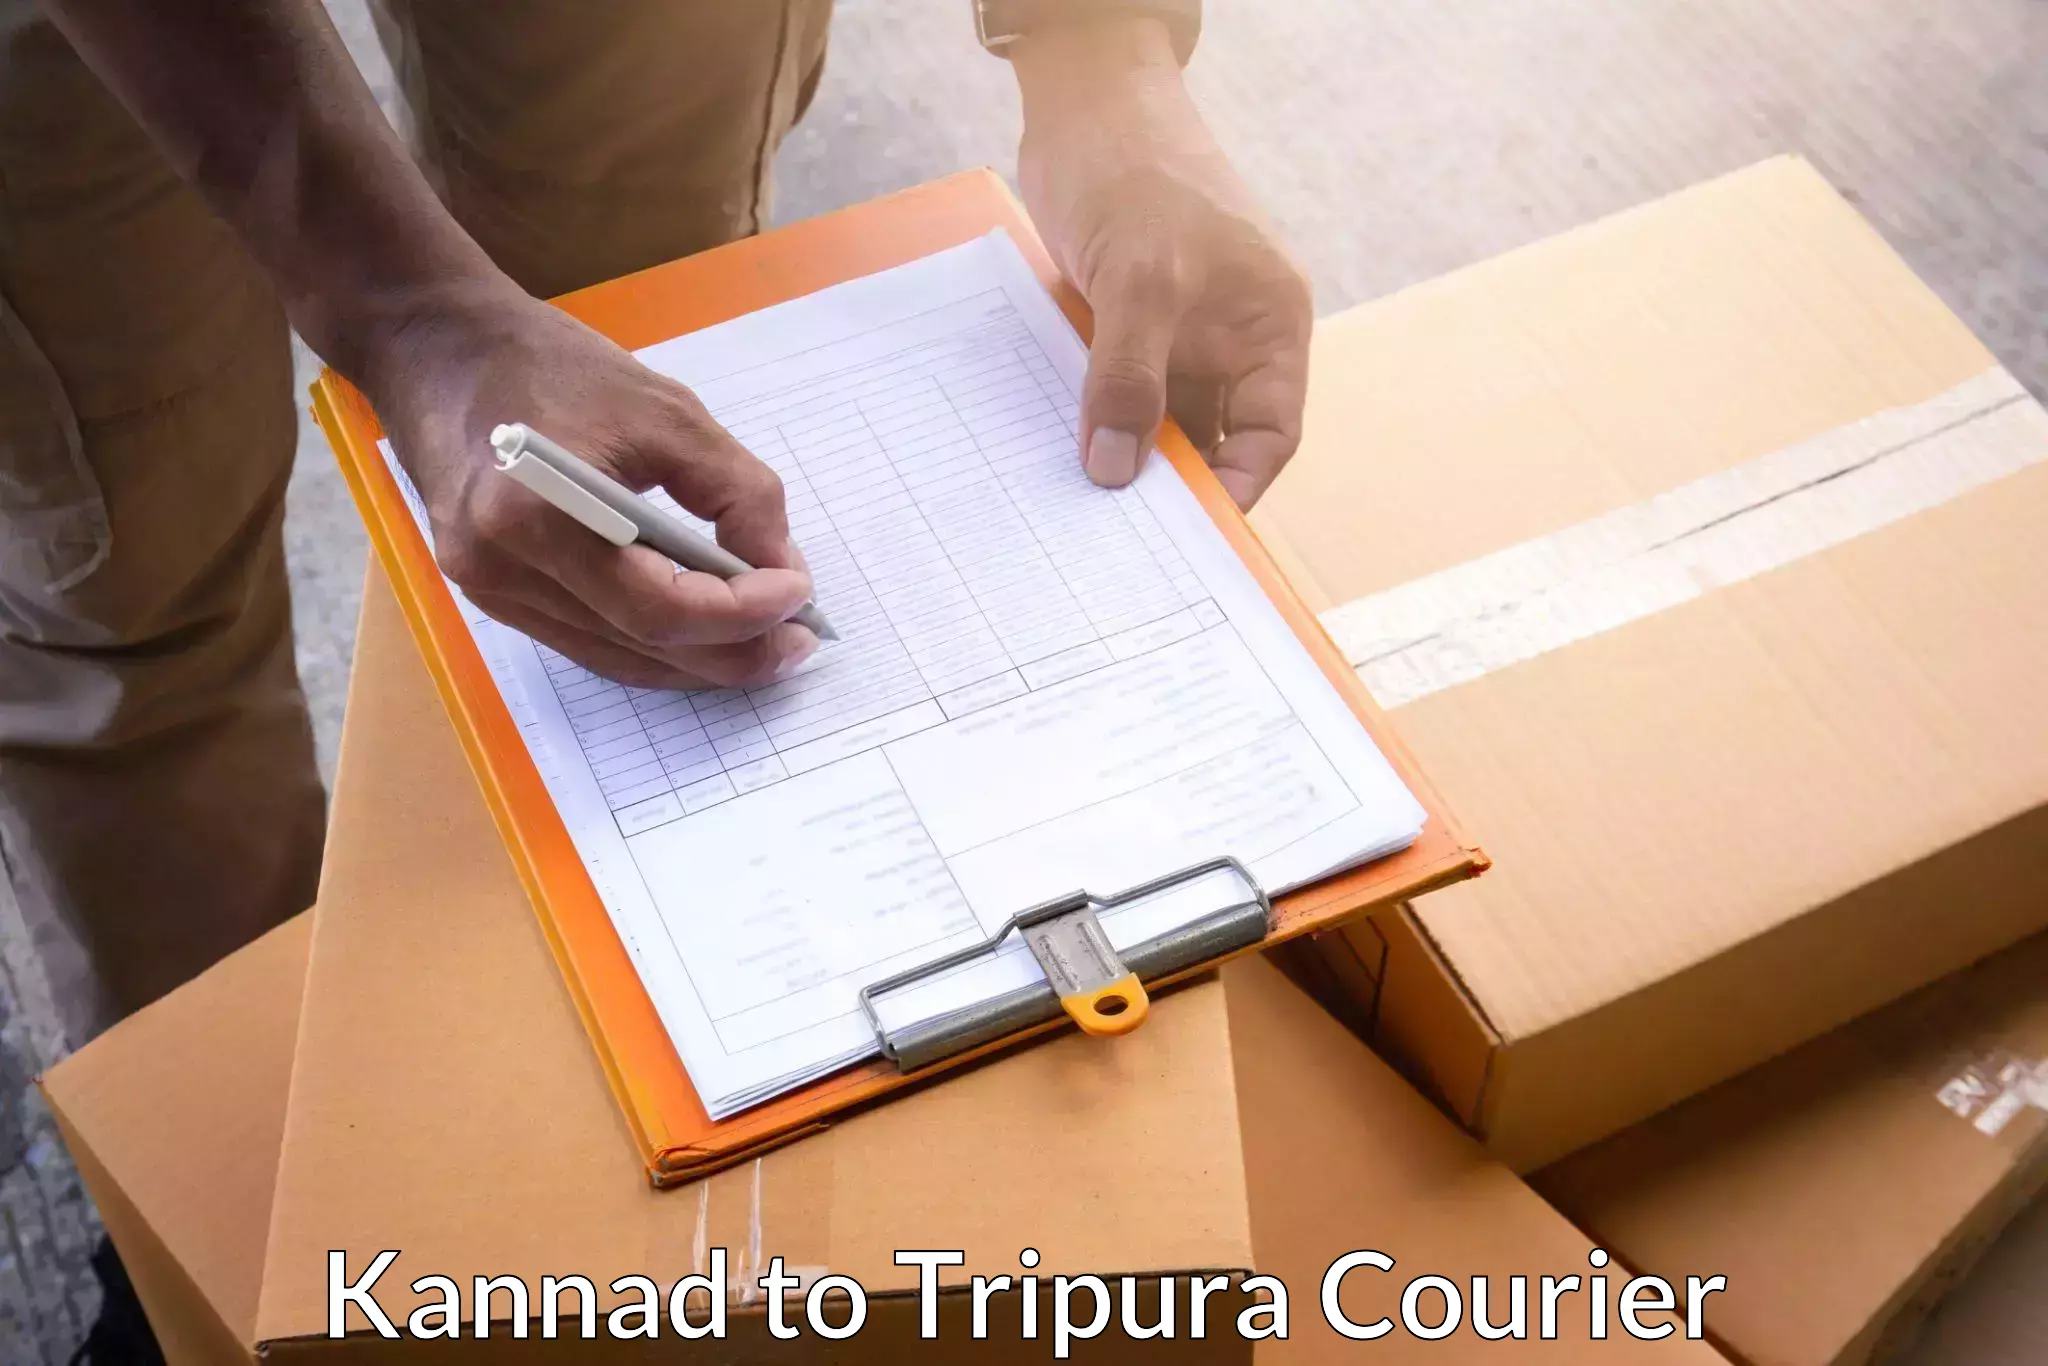 Quick dispatch service Kannad to Agartala